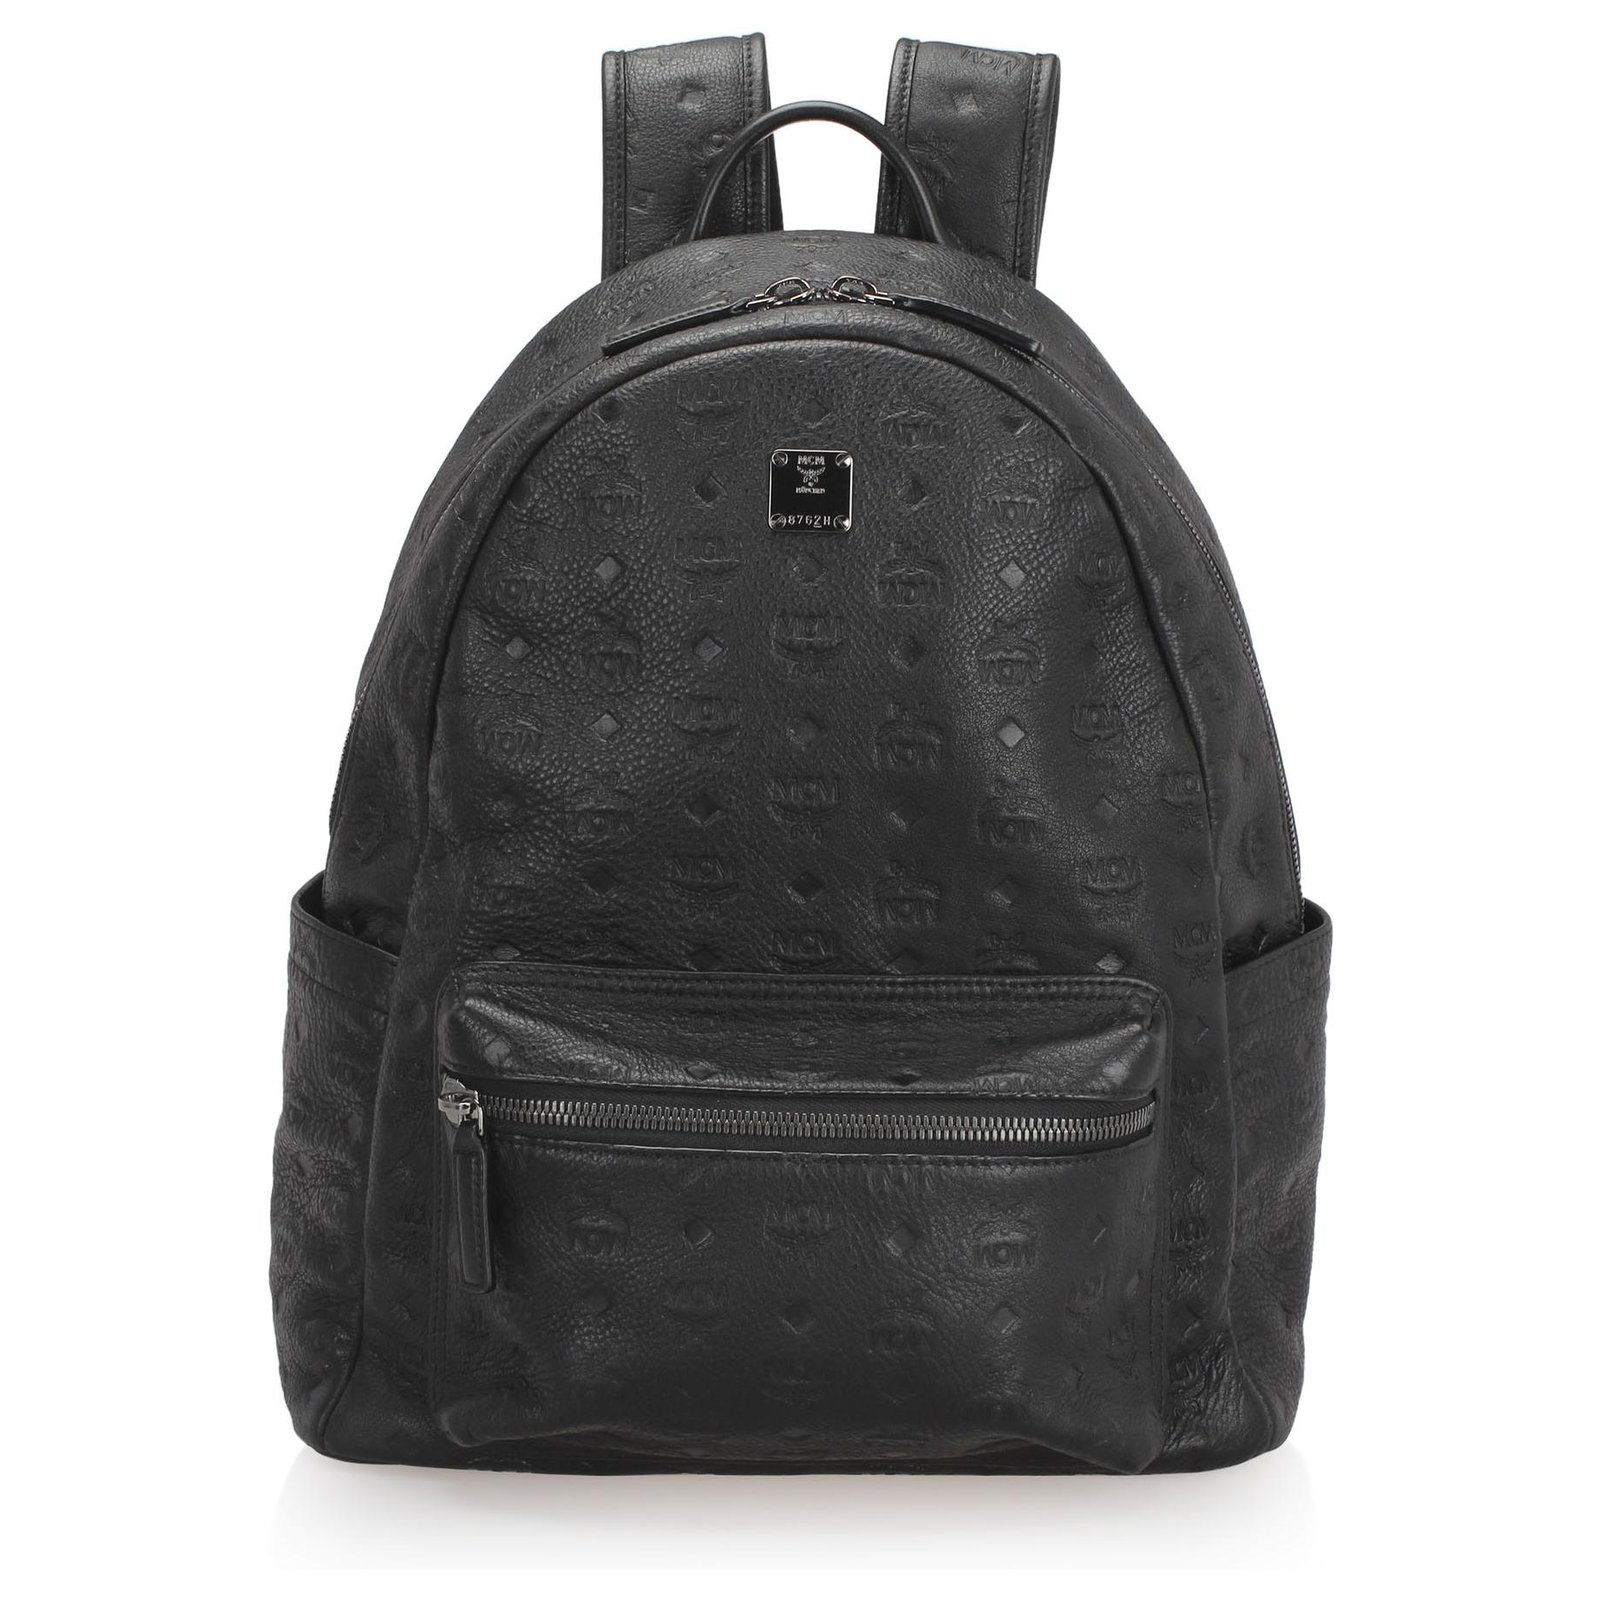 MCM Ottomar Monogram Leather Backpack in Black